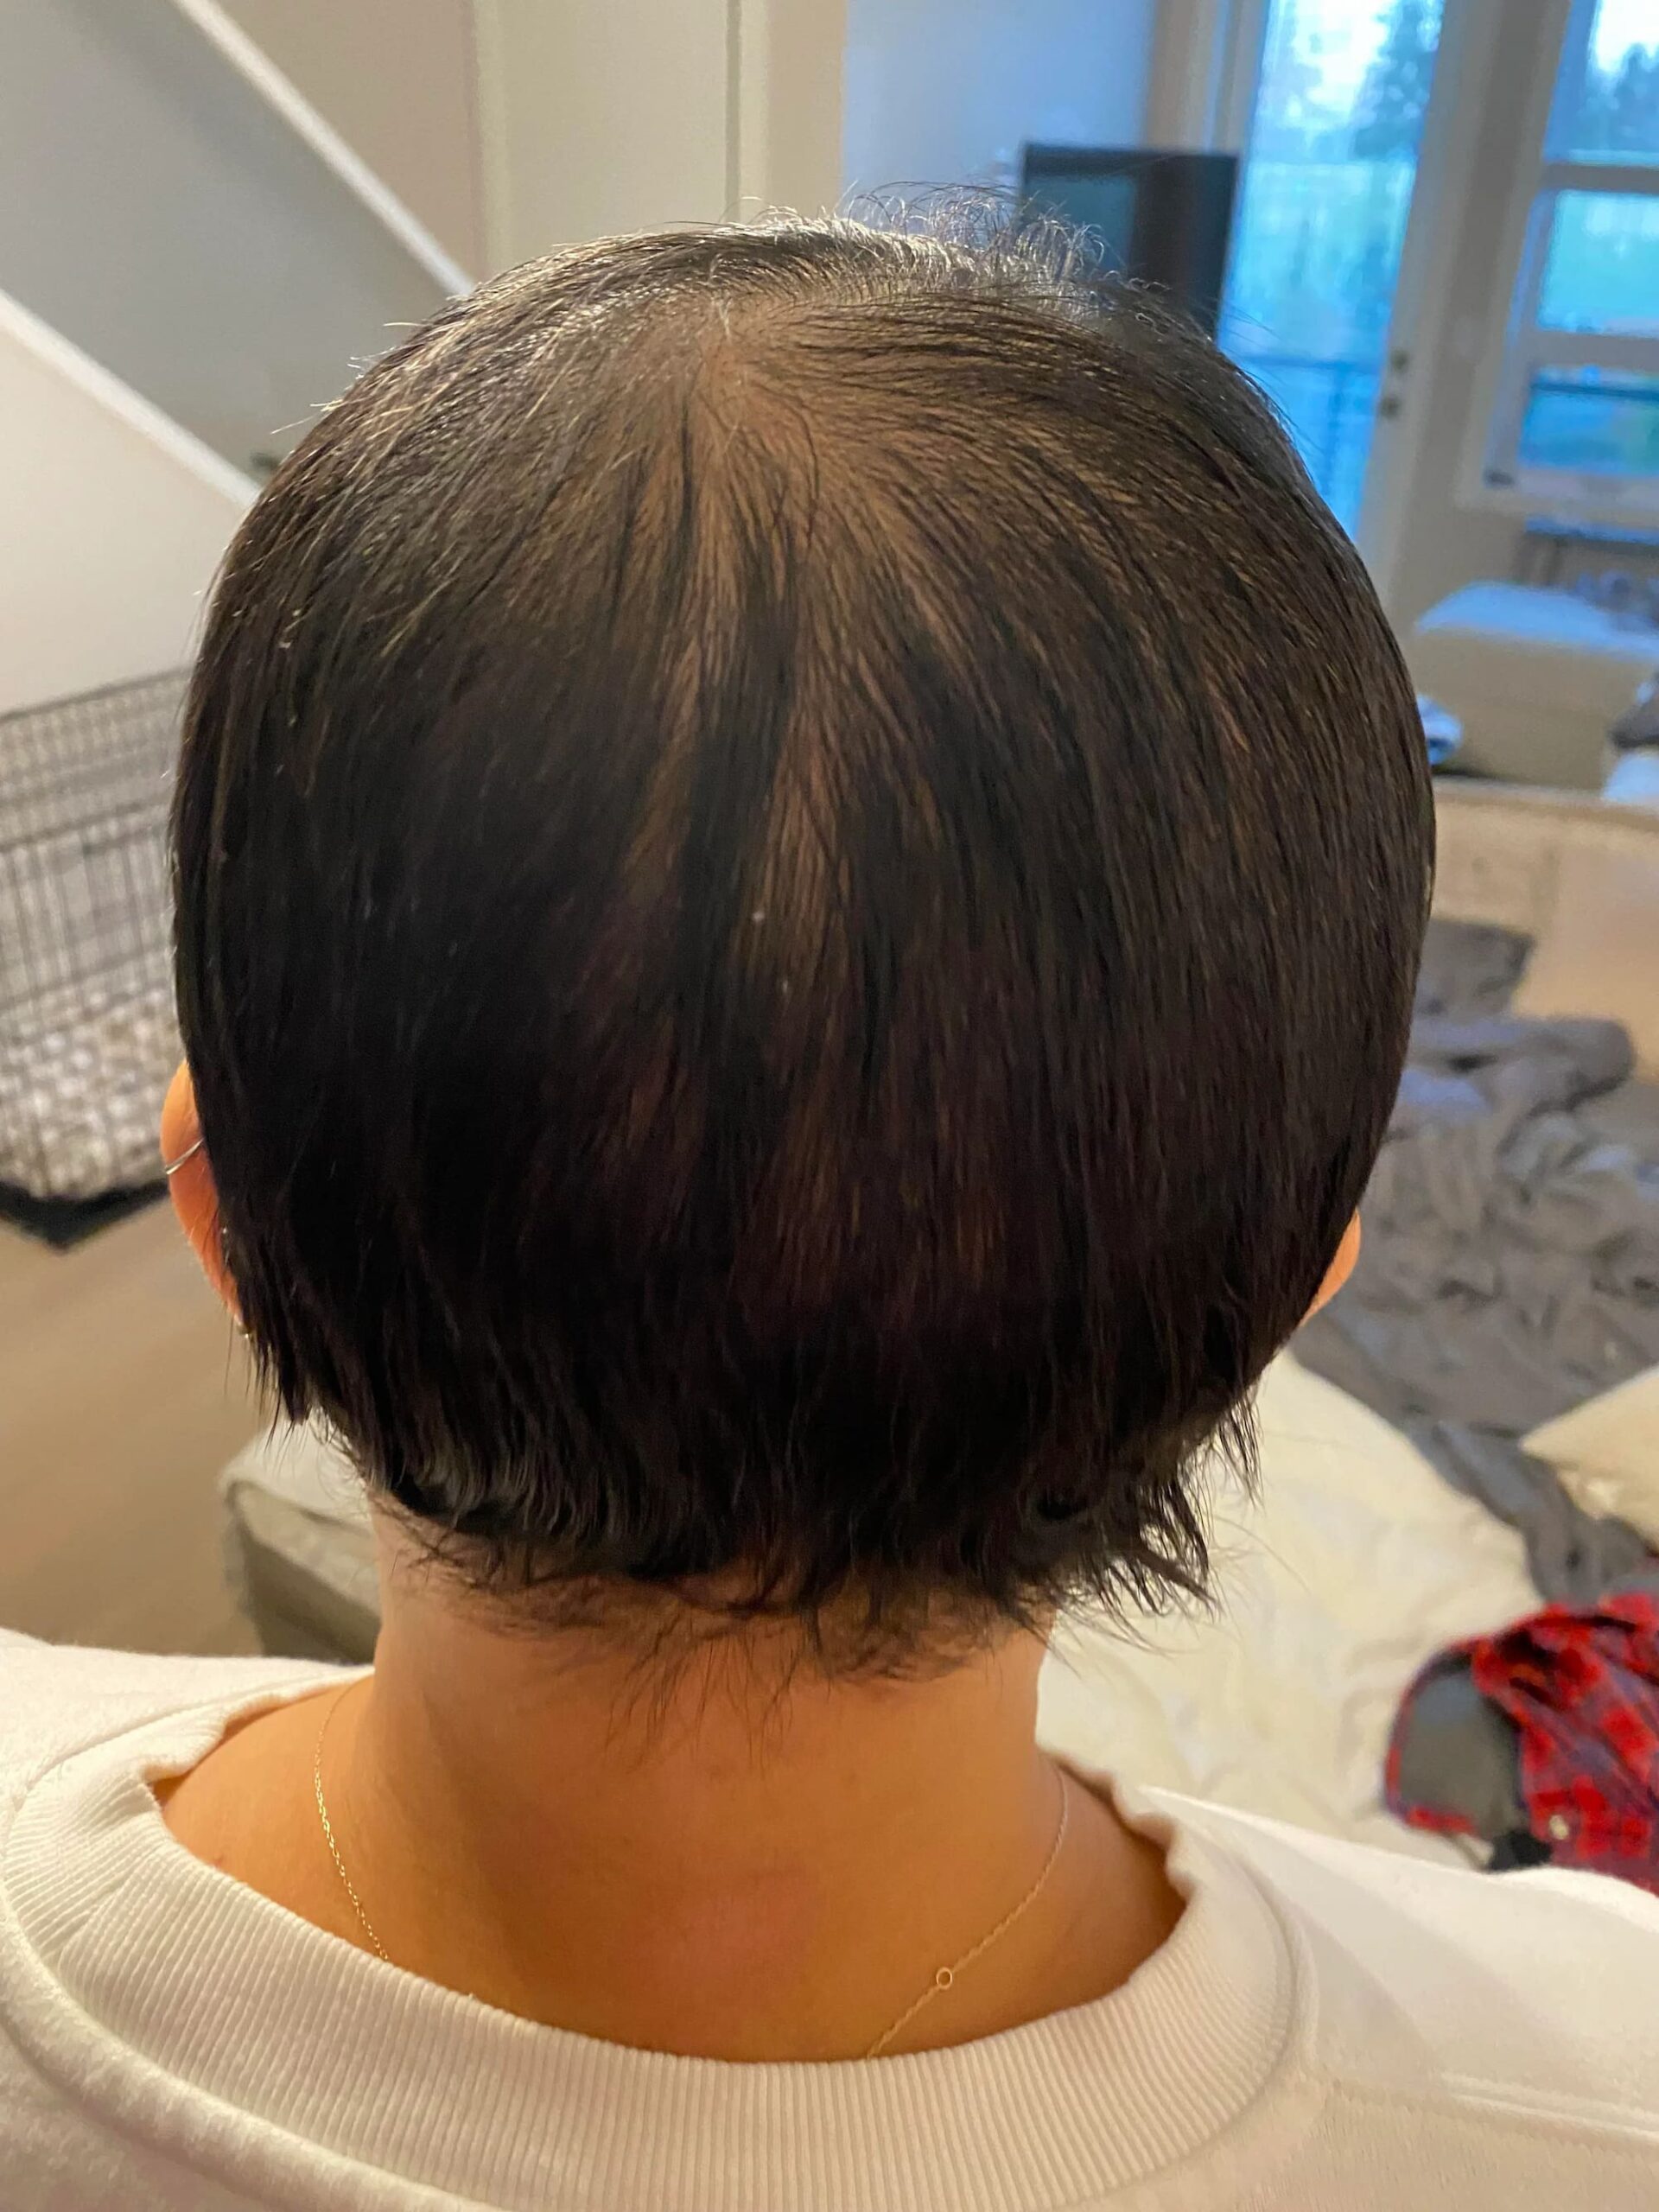 deuruxolitinib alopecia areata results 09 scaled - Alopecia Areata Treatment: What Future Holds